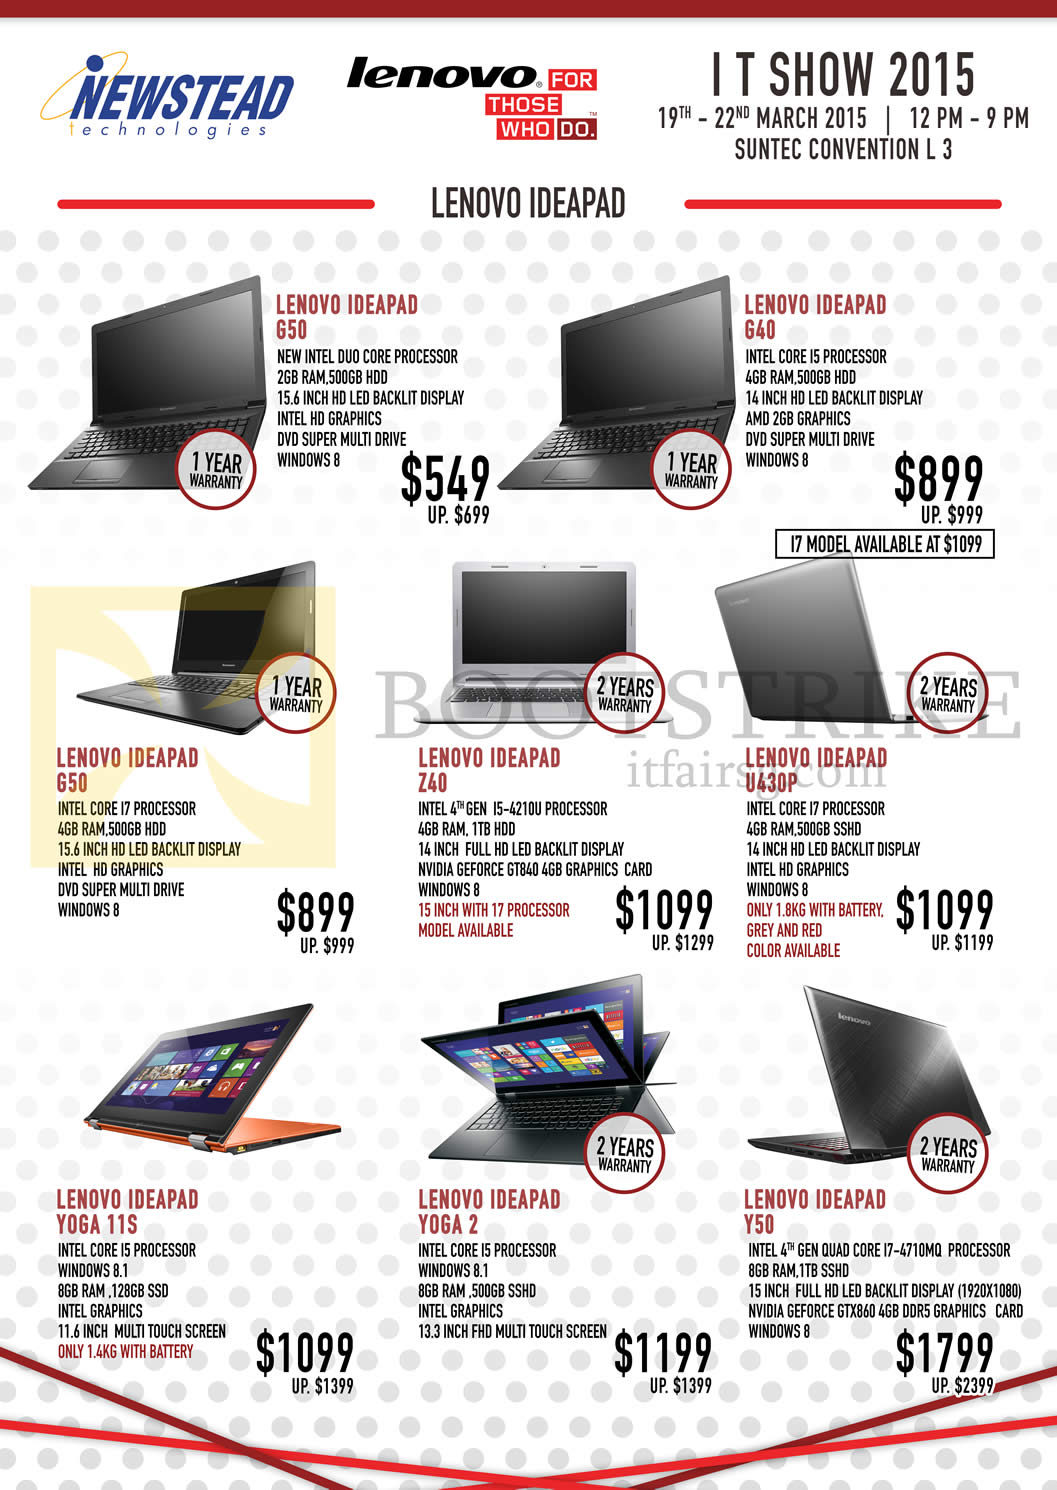 IT SHOW 2015 price list image brochure of Lenovo Newstead Notebooks Ideapad G50, G40, Z40, U430P, Yoga 11S, Yoga 2, Y50